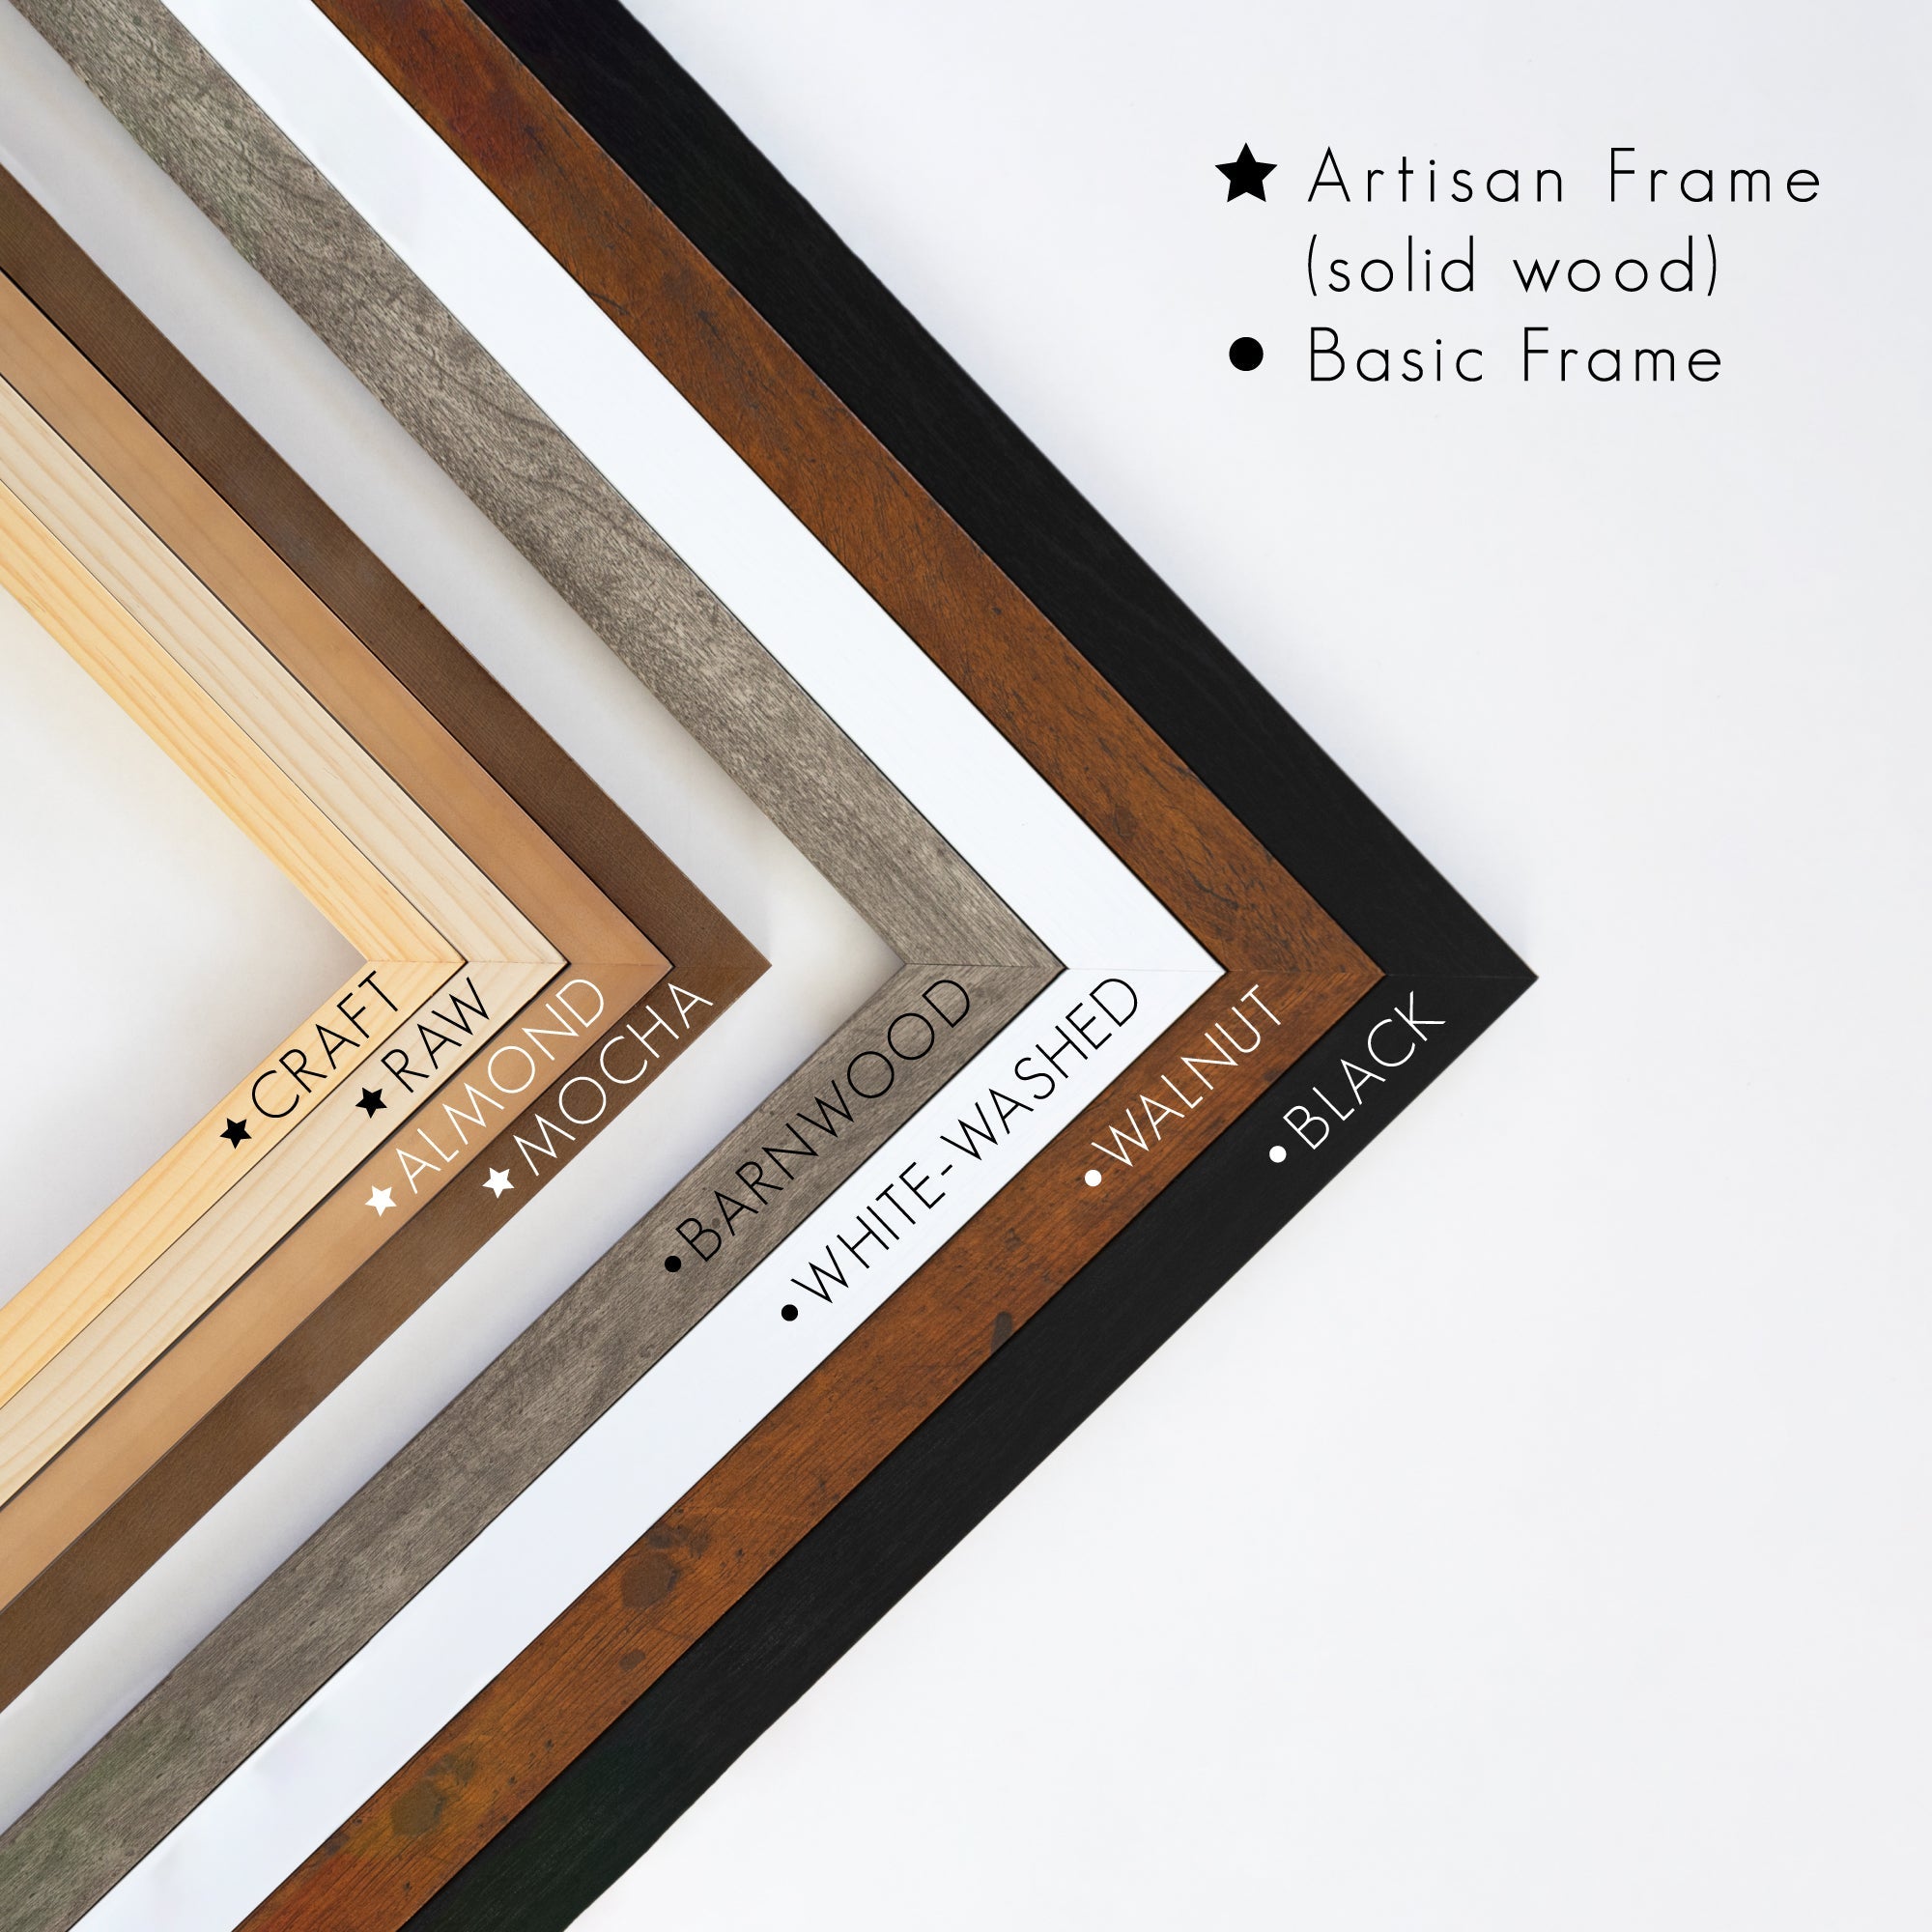 Large Framed Whiteboard | Horizontal Perkins